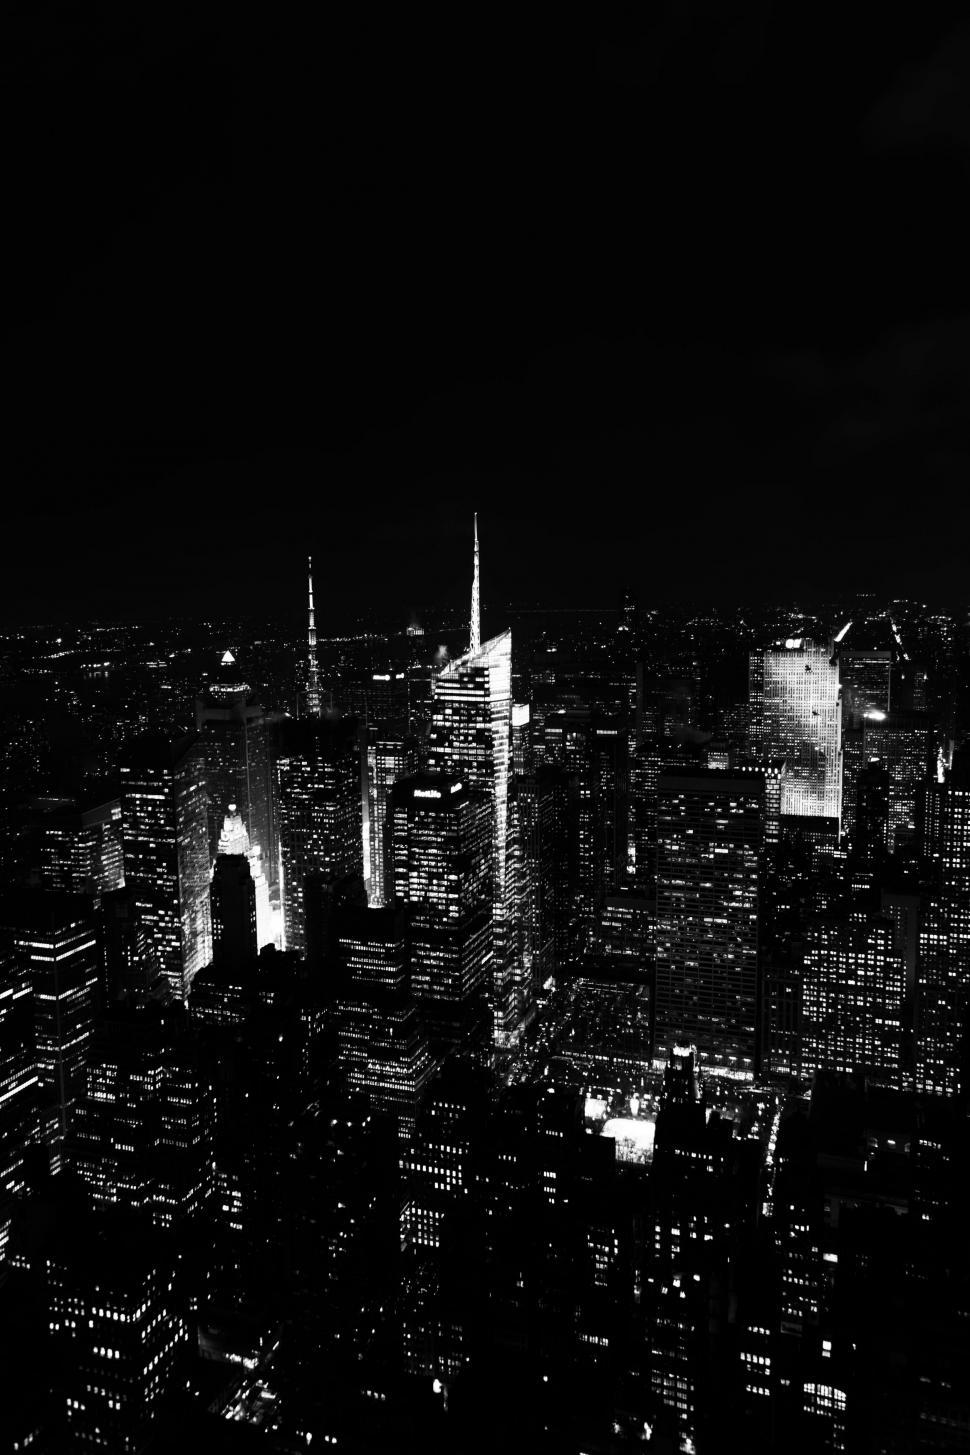 Free Image of Cityscape in Monochrome 